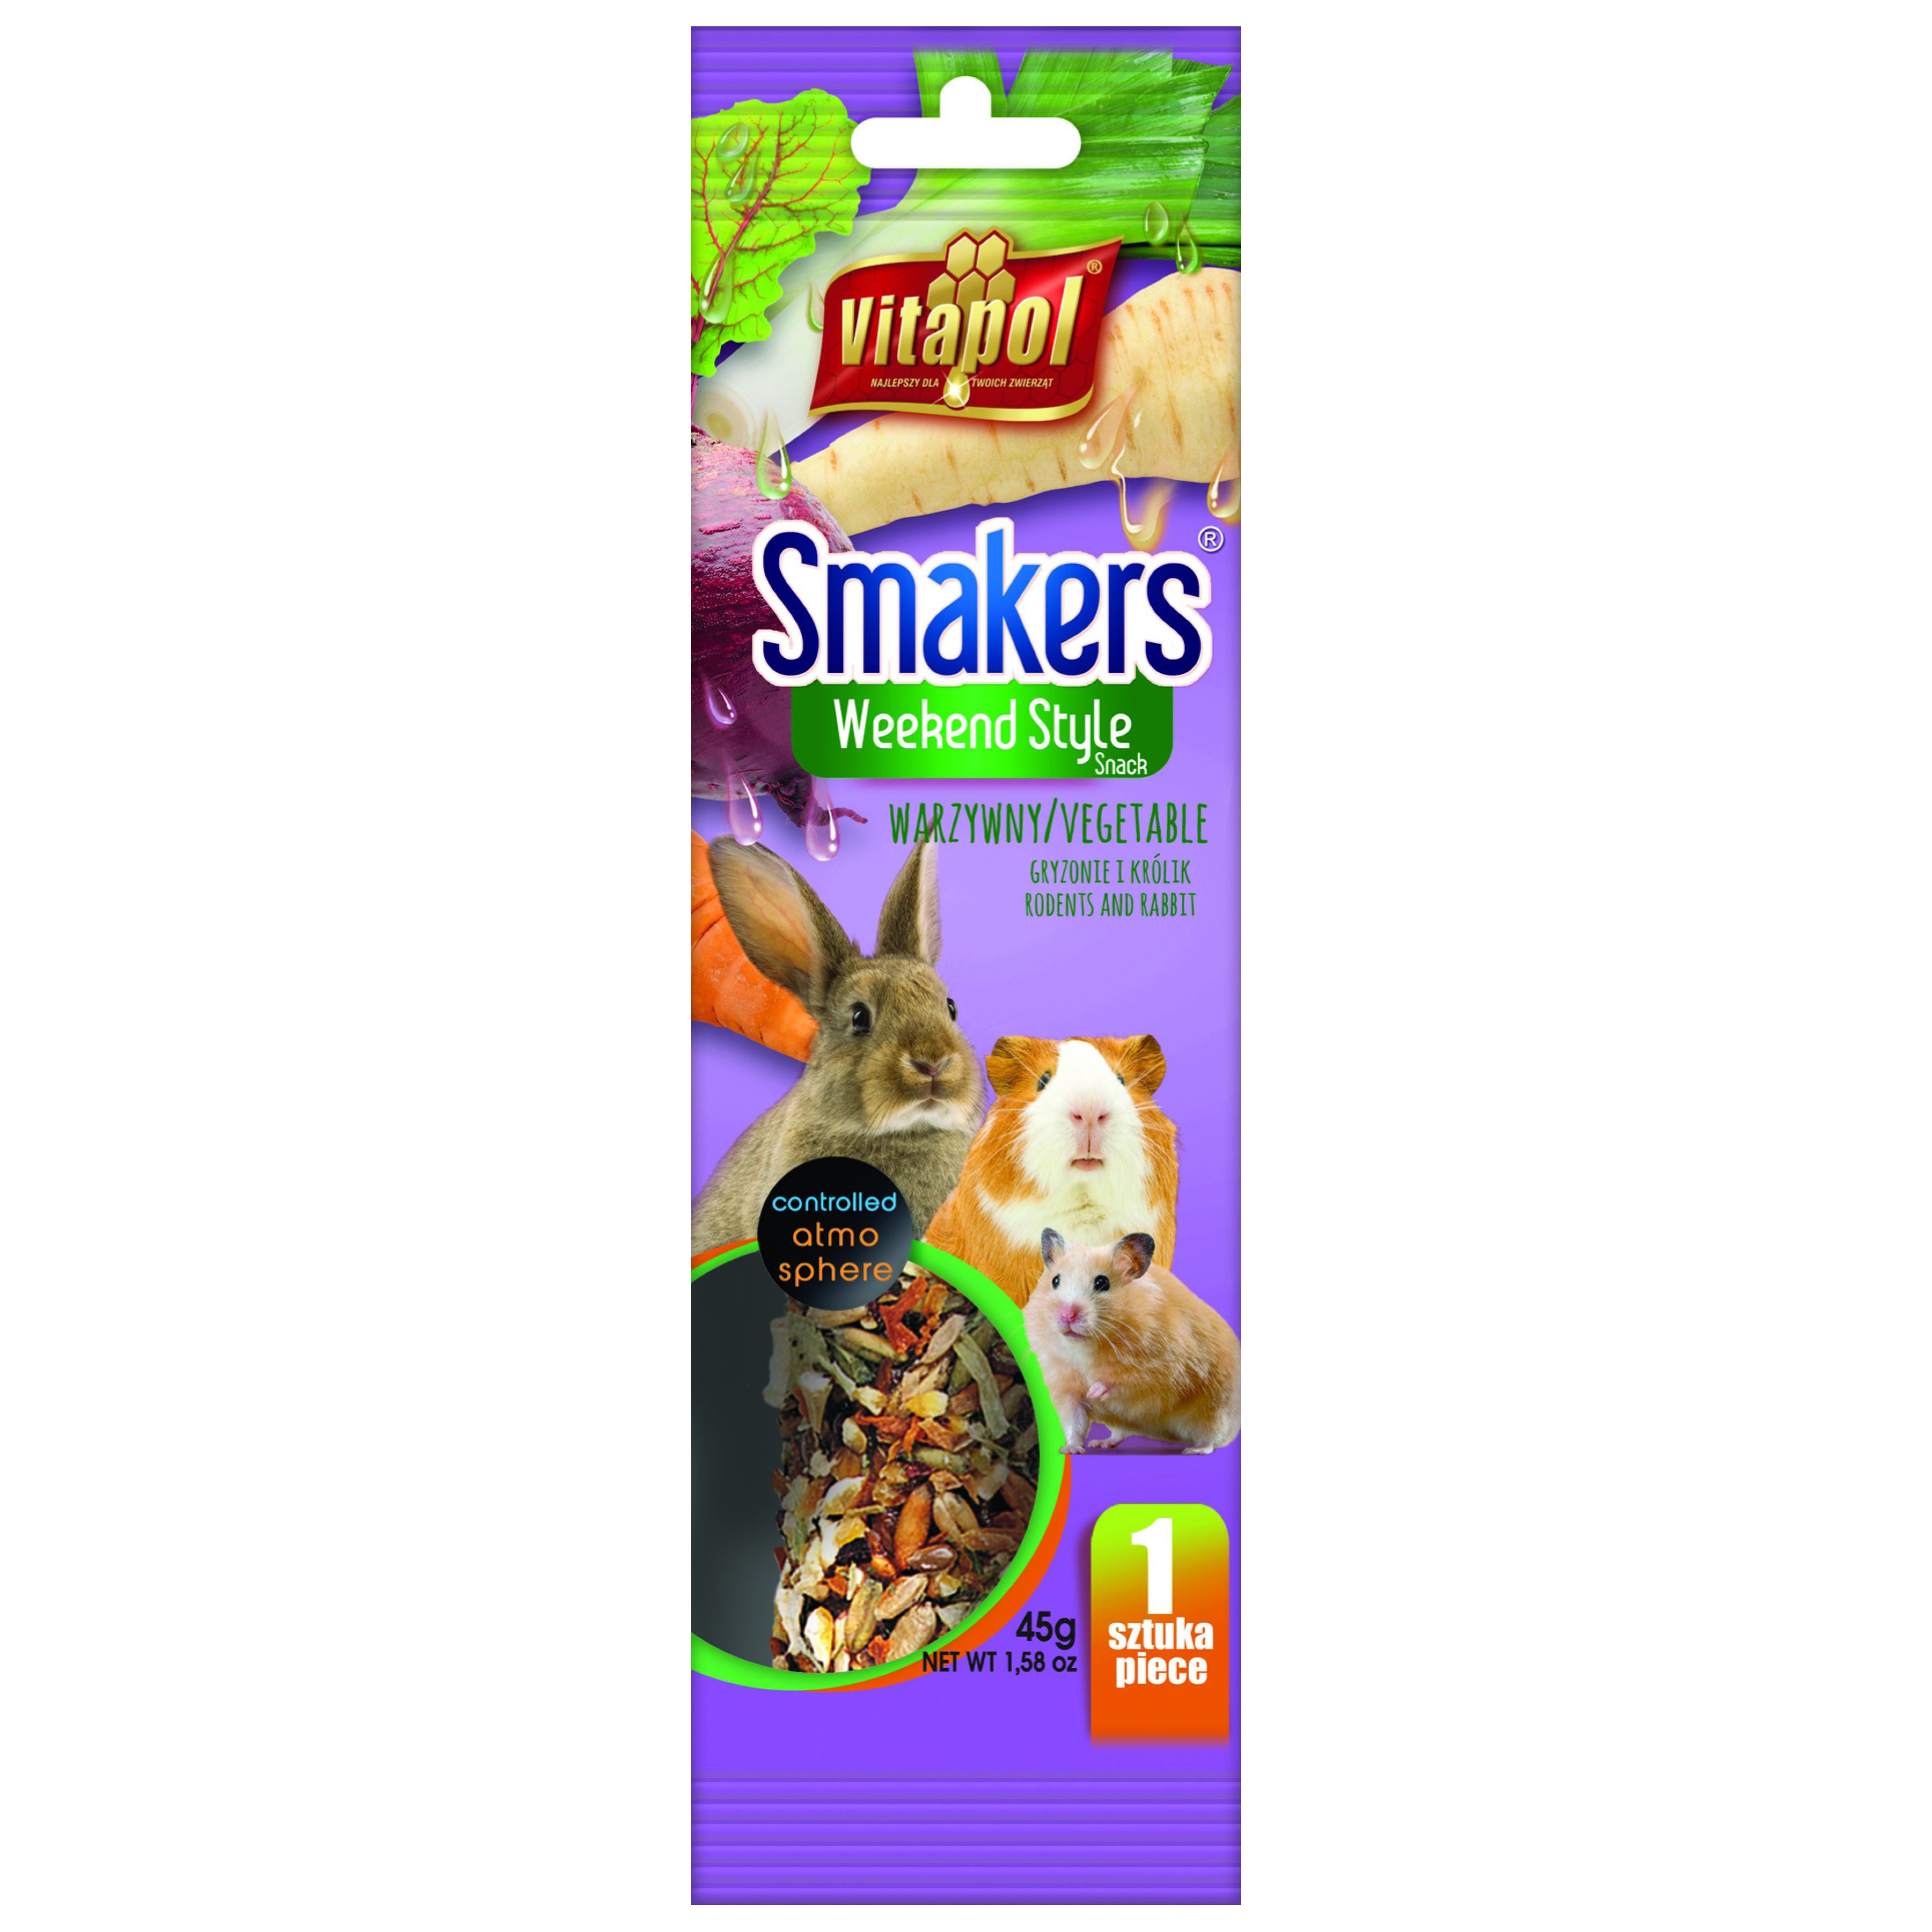 VITAPOL SMAKERS Weekend Style ผักสำหรับหนูและกระต่าย (45g)